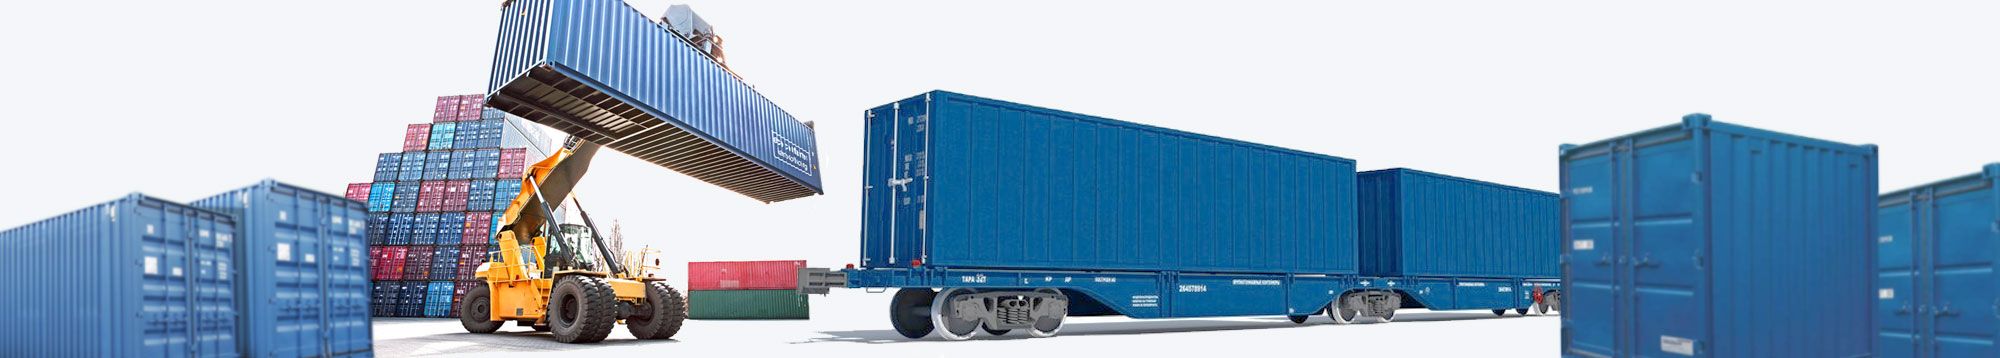 ЖД контейнерные грузоперевозки | Цены на перевозку жд грузов фото №1